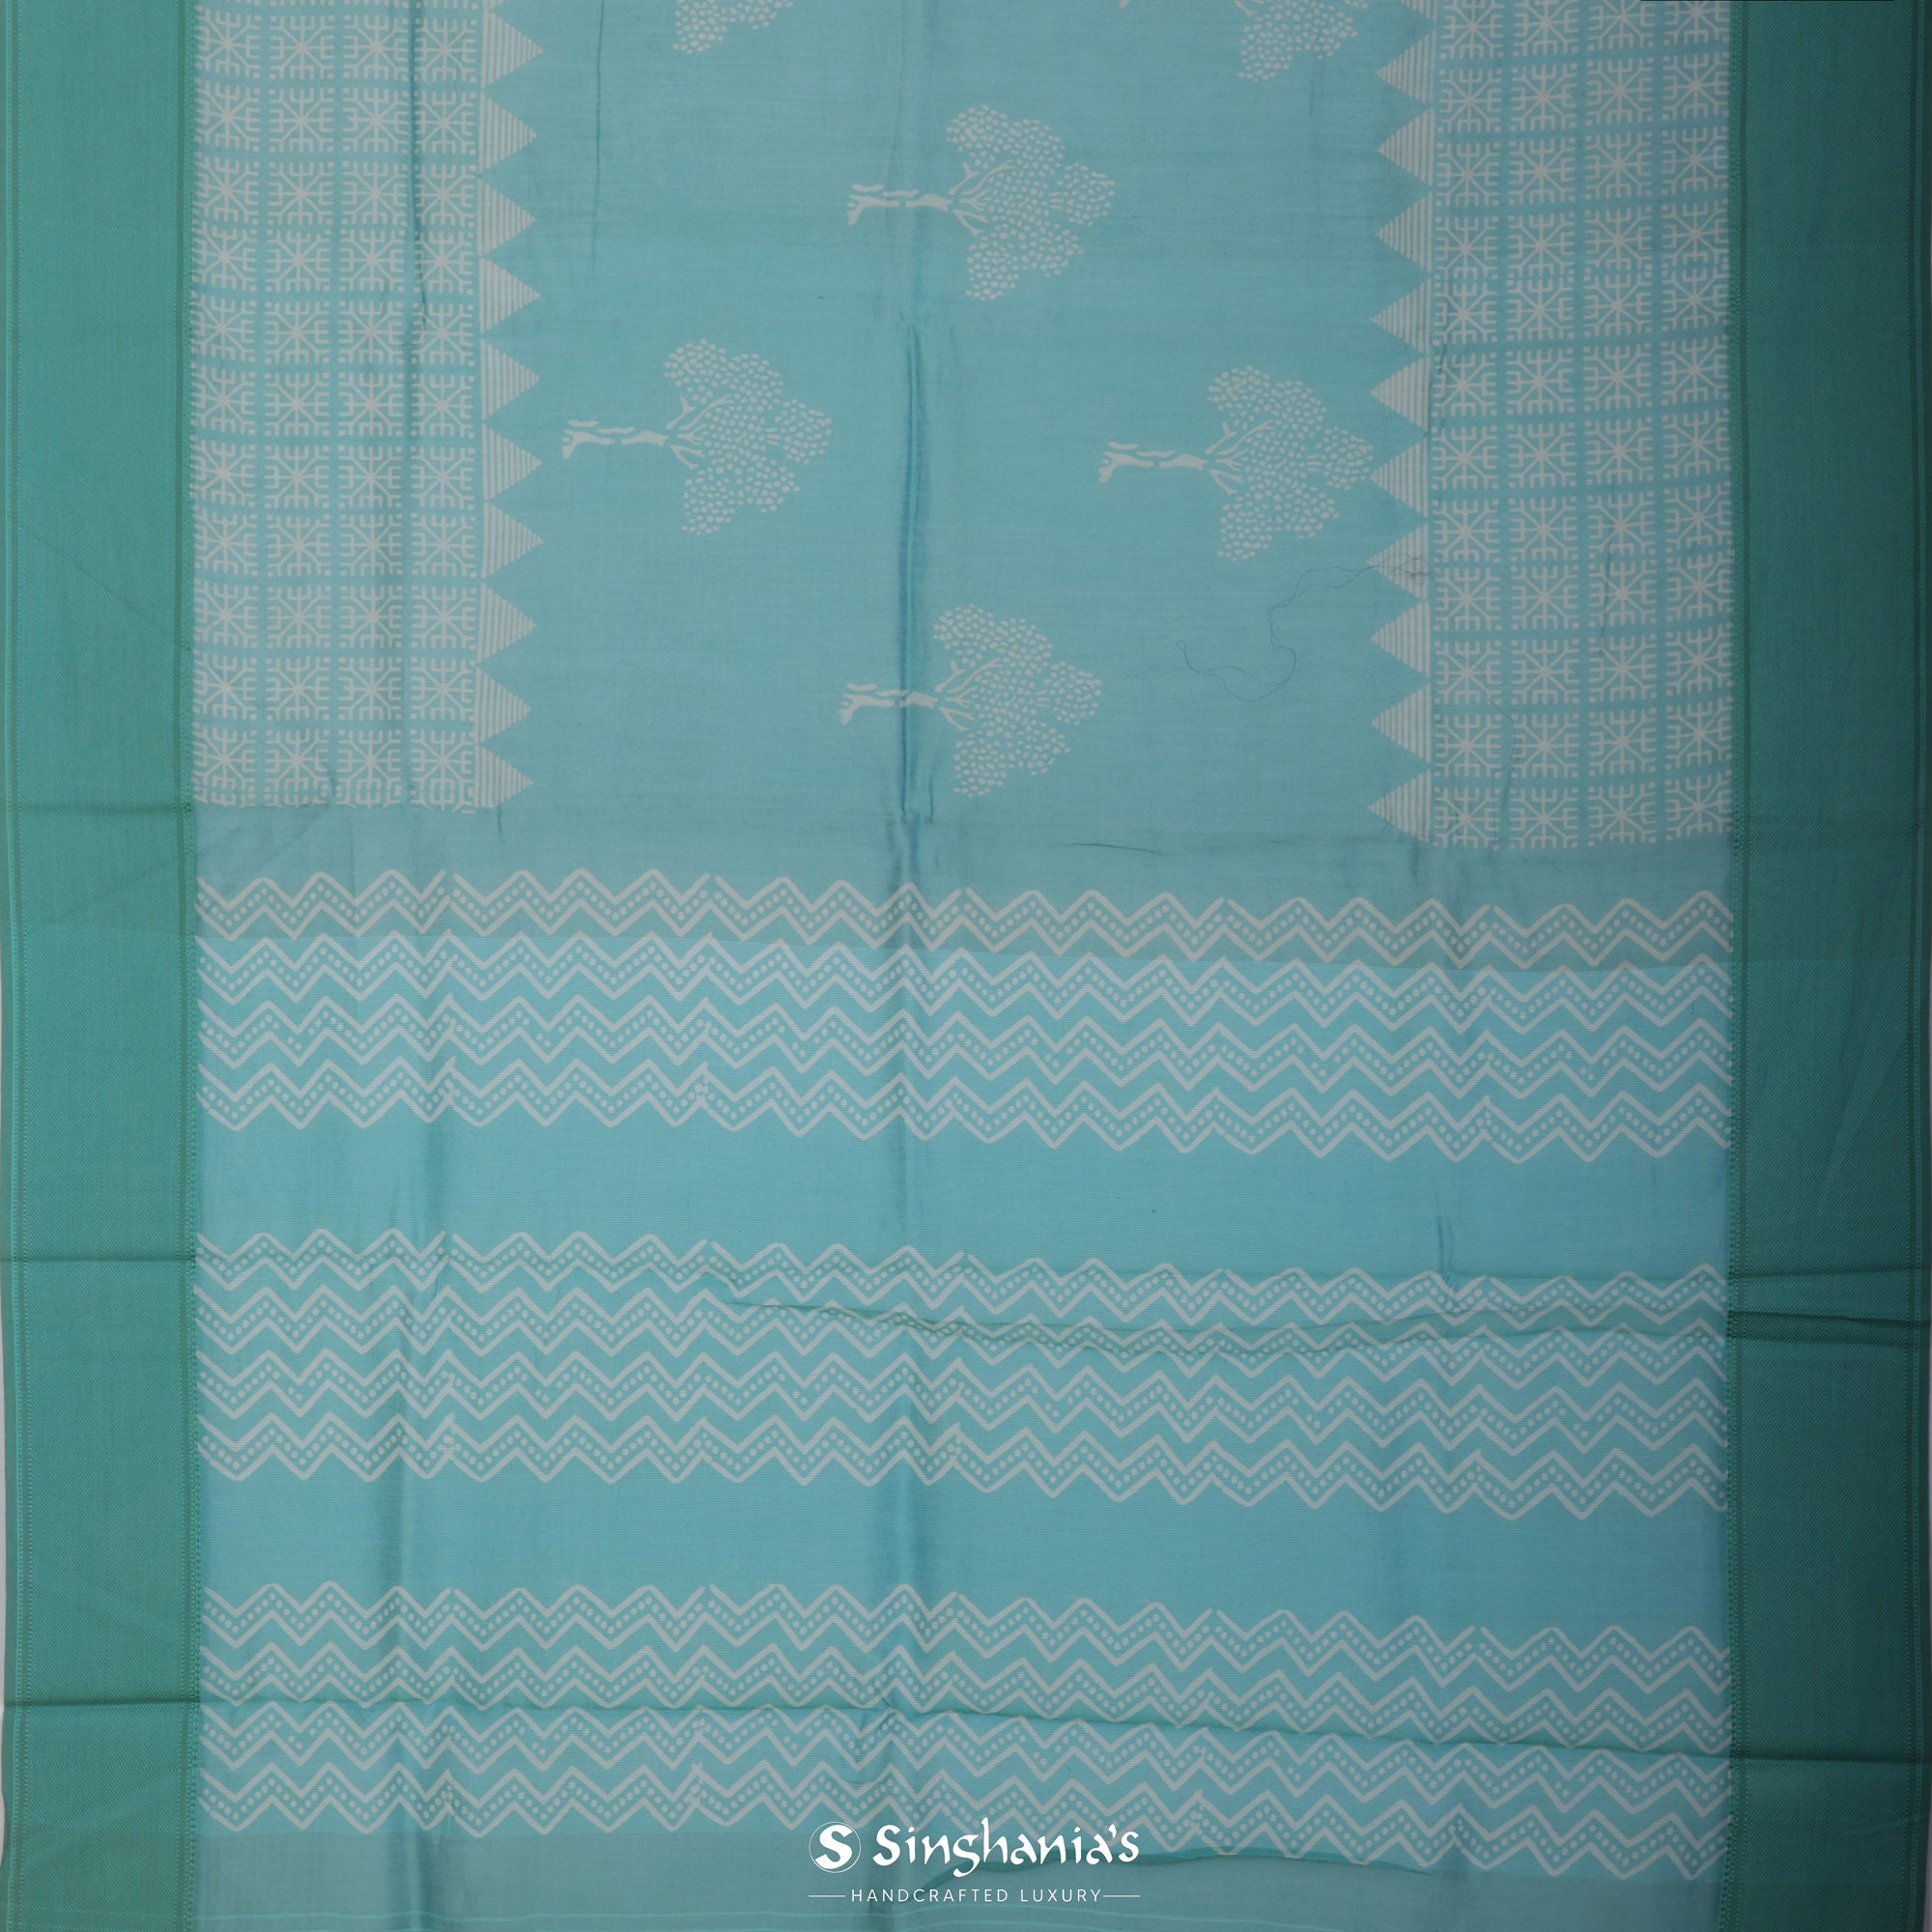 Ultramarine Blue Printed Chanderi Silk Saree With Tree Pattern